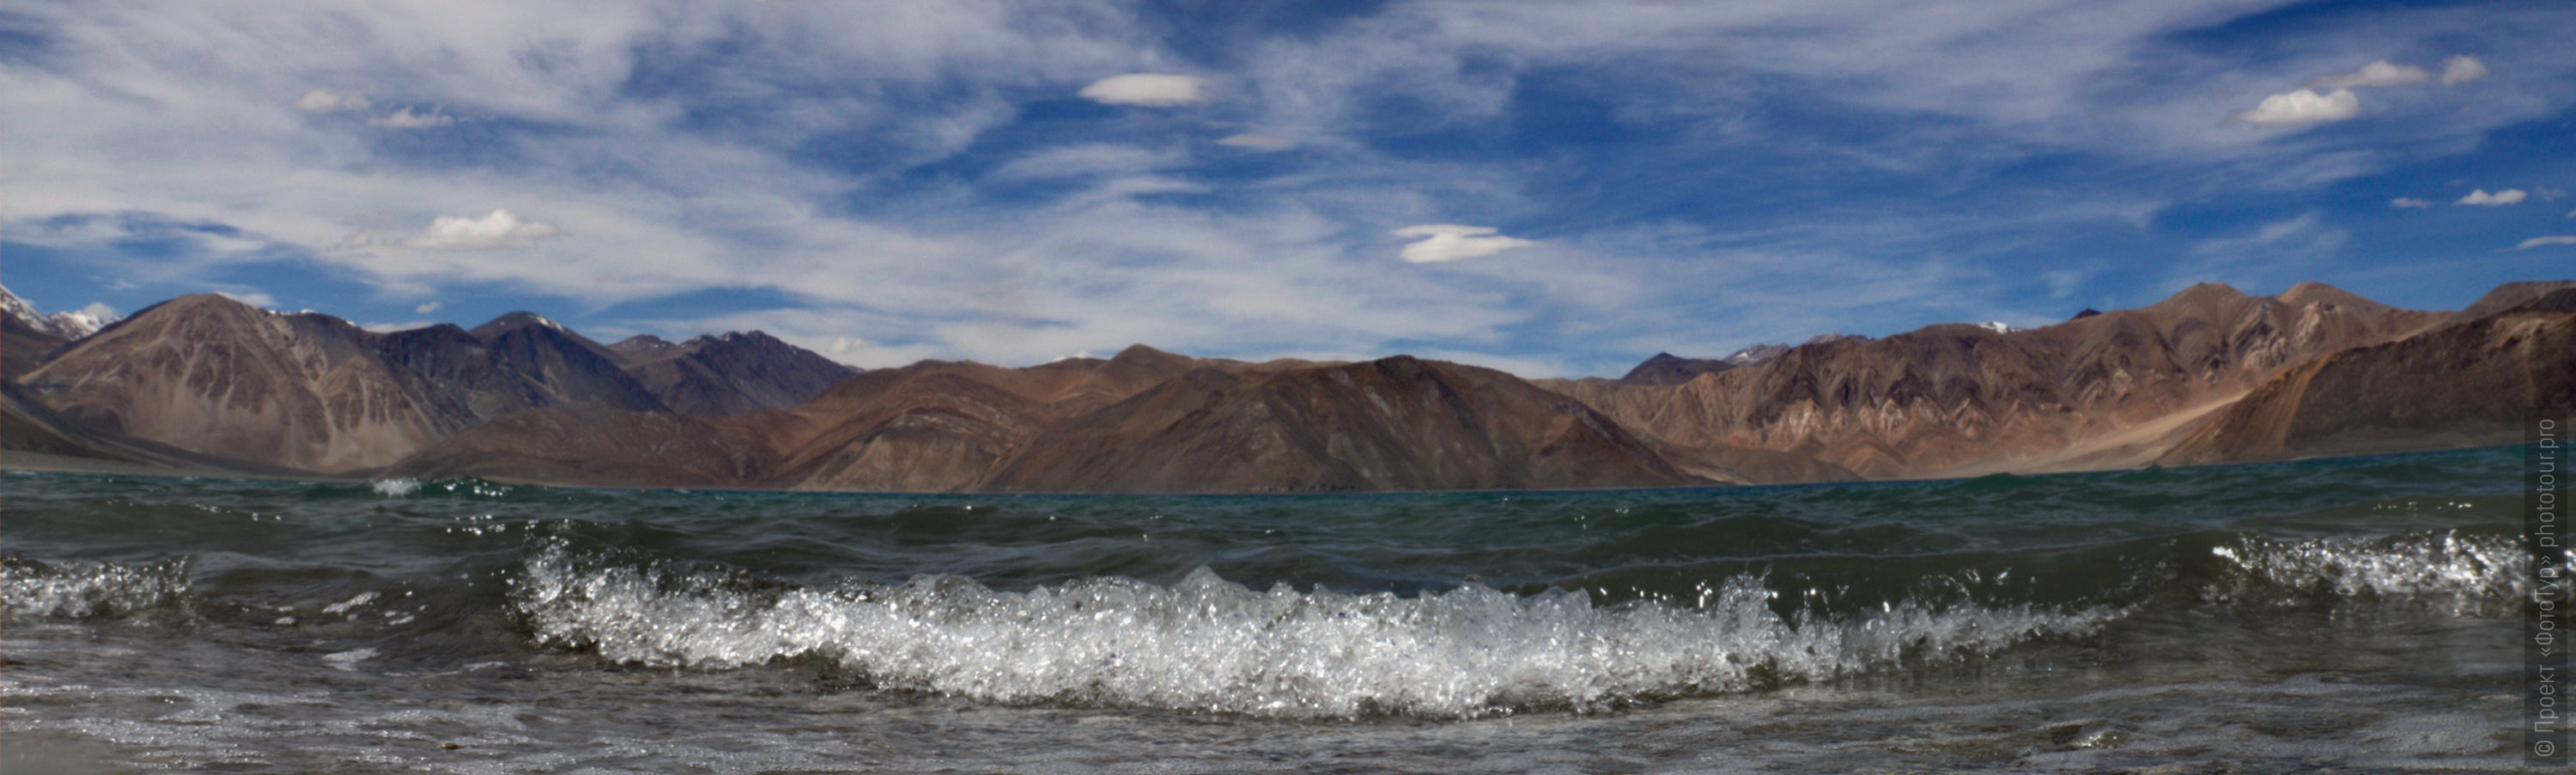 Waves Pangong Tso Lake, Ladakh, Northern India. Photo tour of the lake Pangong, Ladakh, in October 2017.